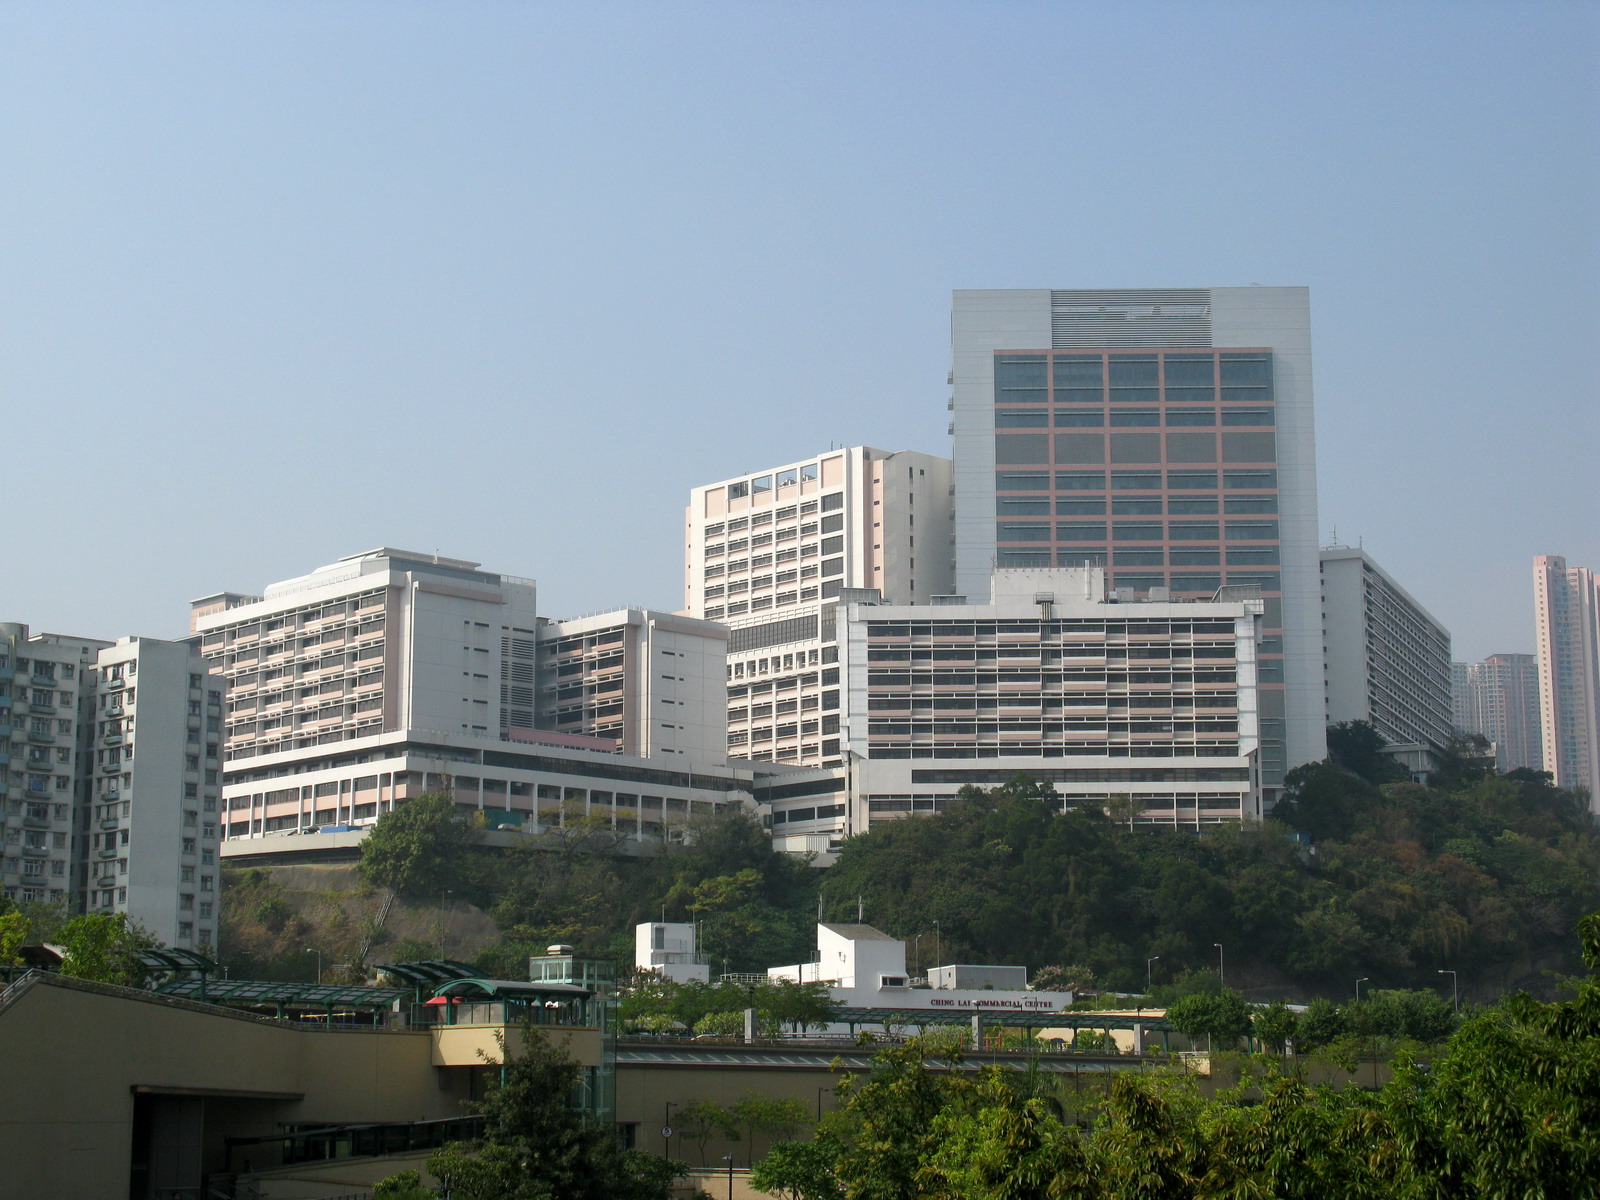 Patients at North Lantau Hospital will be transferred to Princess Margaret Hospital.